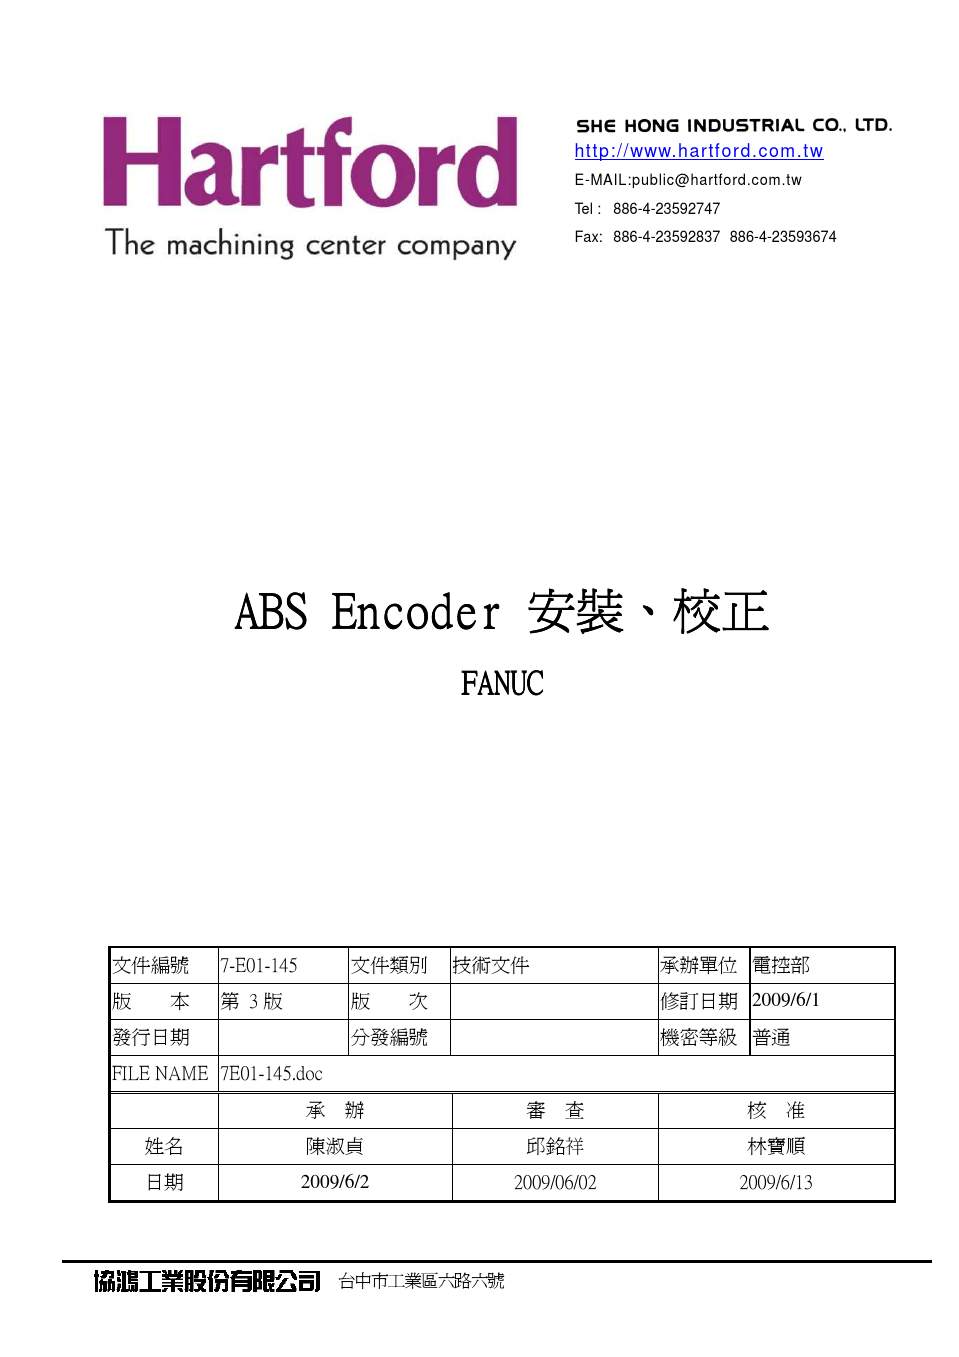 FANUC ABS Encoder 安装、校正